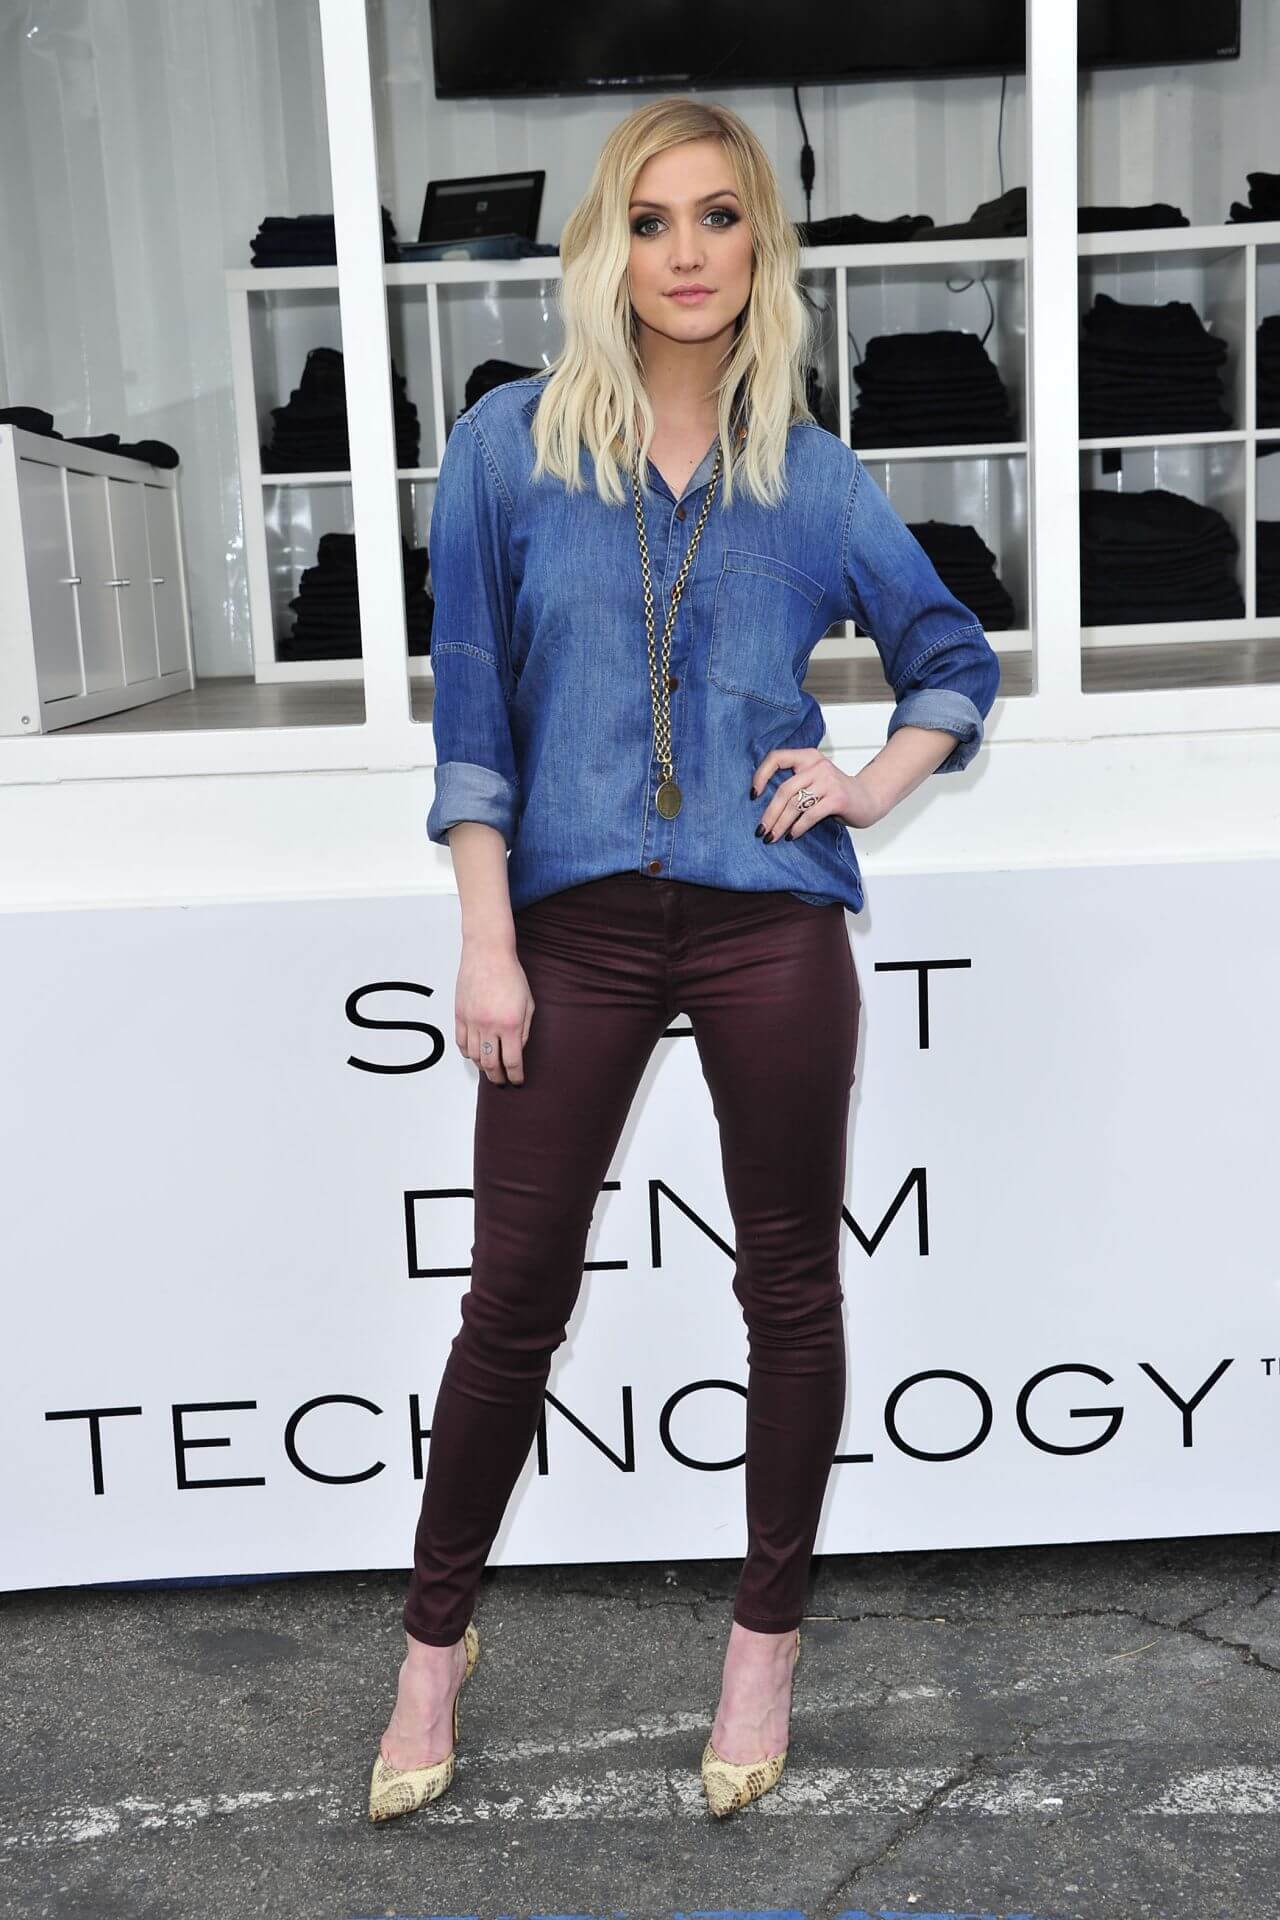 Ashlee Simpson In Blue Denim Shirt With Maroon Jeans At DL Premium Denim Digital Showroom in Venice